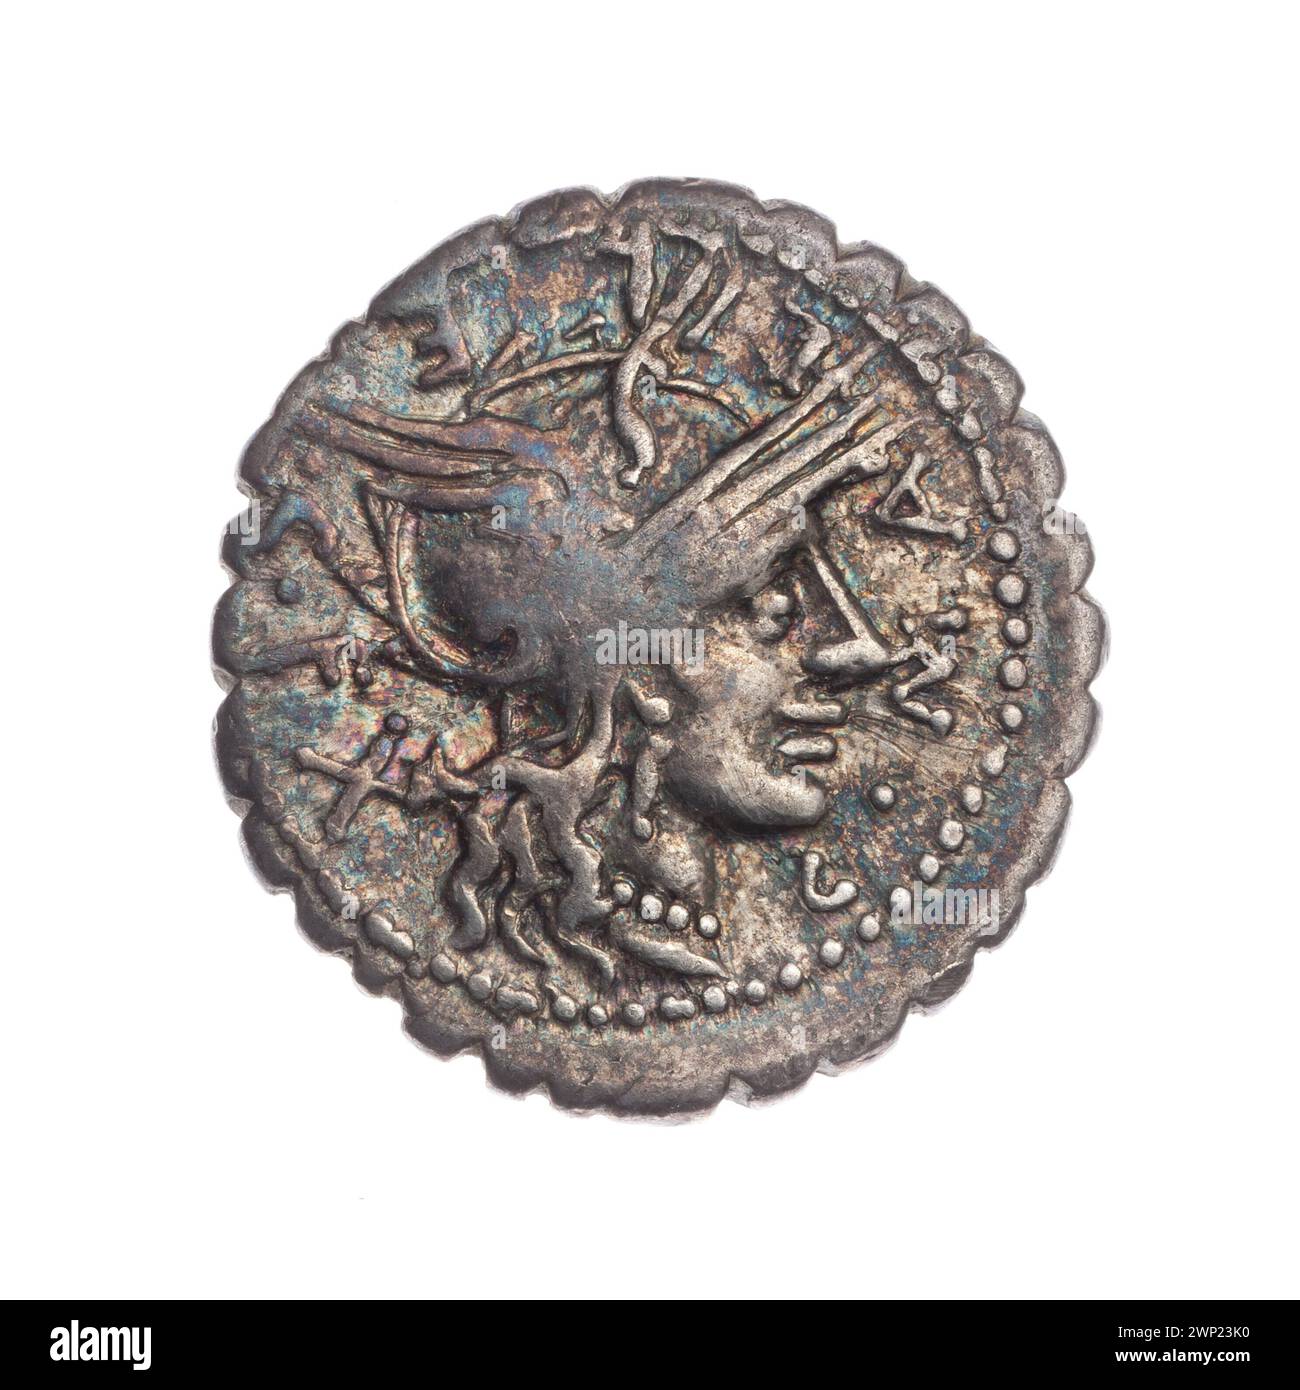 Denar of Publicus Malleolus, C. (Fl. 118 A.C.), Licinius Crassus, L. (Fl. 118 A.C.), Domitius Ahenobarbus, Cn. (fl. 189-180 A.C.); 118 BC (-118-00-00--118-00-00);State Art Collections (Warsaw - 1922-1939) - collections, Roma (mitol.), Crynyx, Roma's head in a helmet (iconogr.), Attic helmet, helmets, message (provenance), shields, warrior in Biga (iconogr.), spears Stock Photo